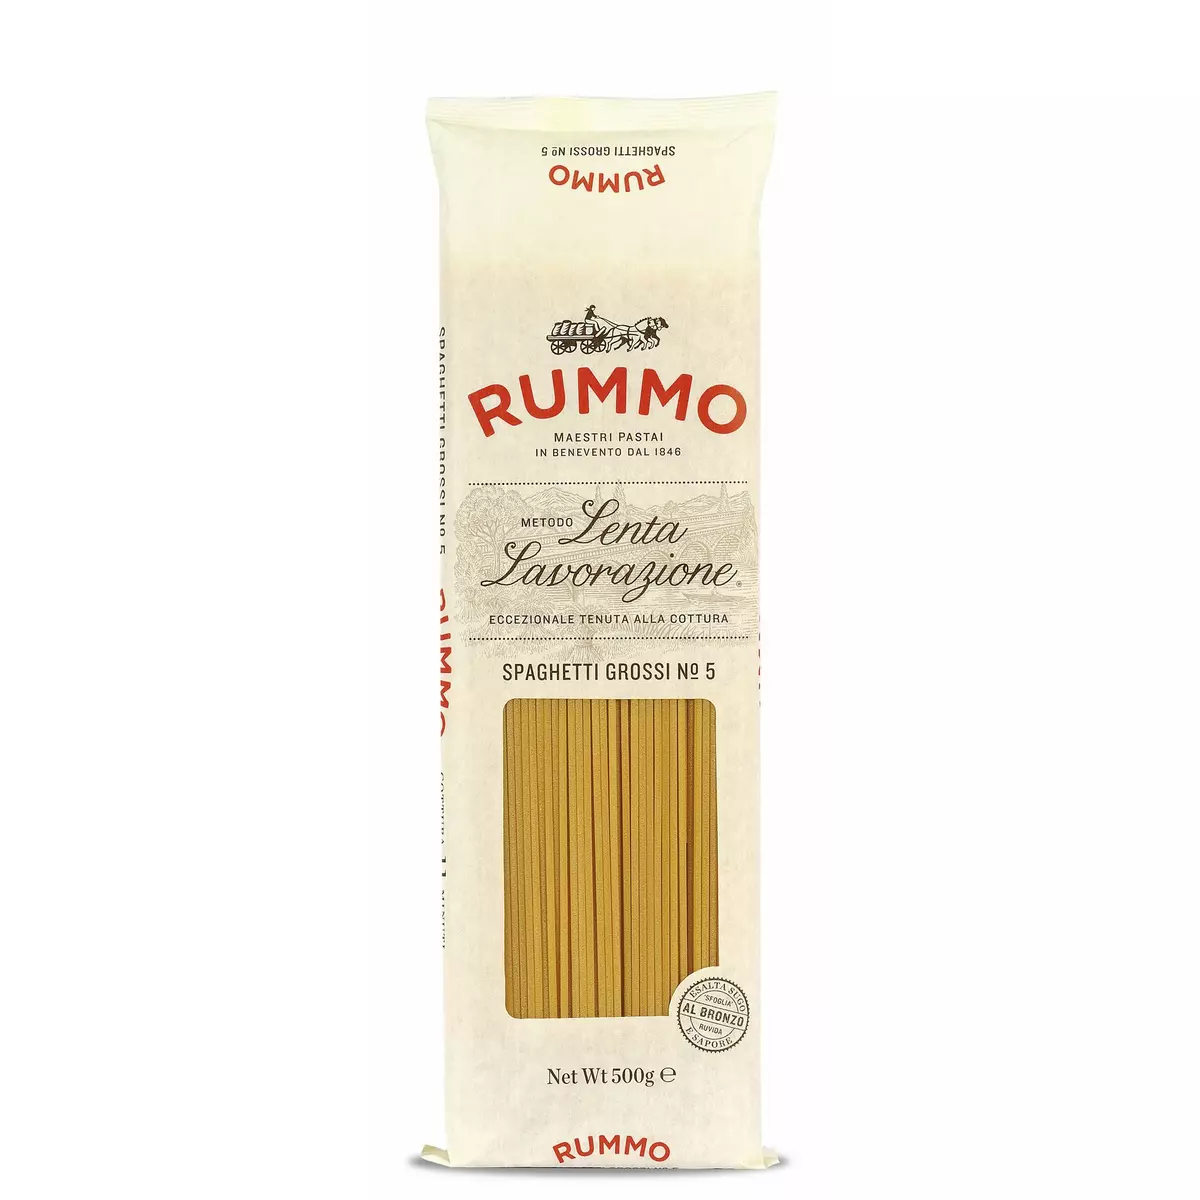 RUMMO Spaghetti grossi n°5 500g